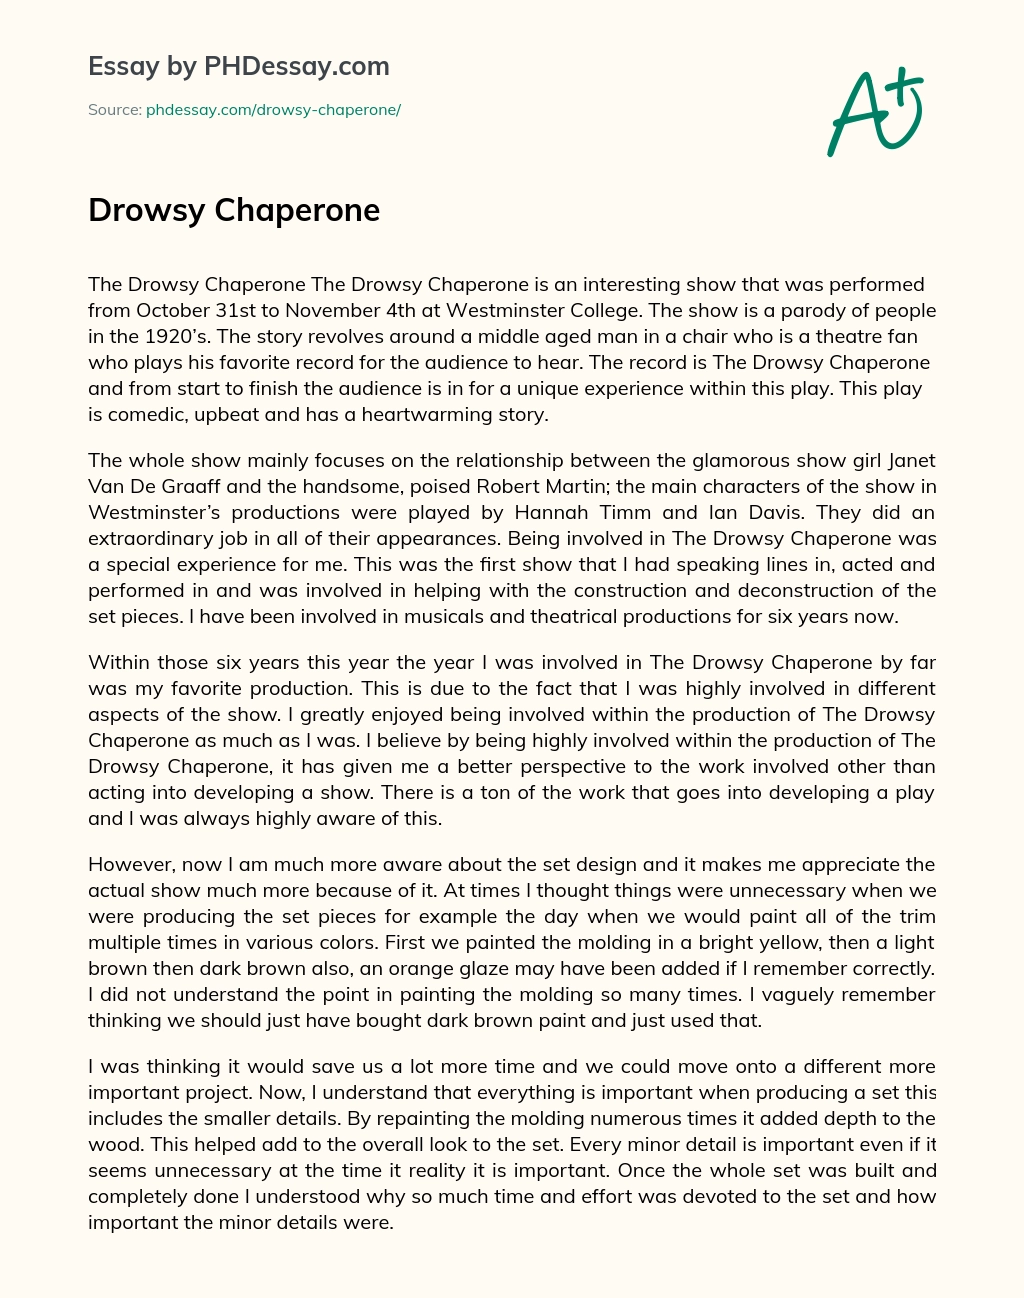 Drowsy Chaperone essay